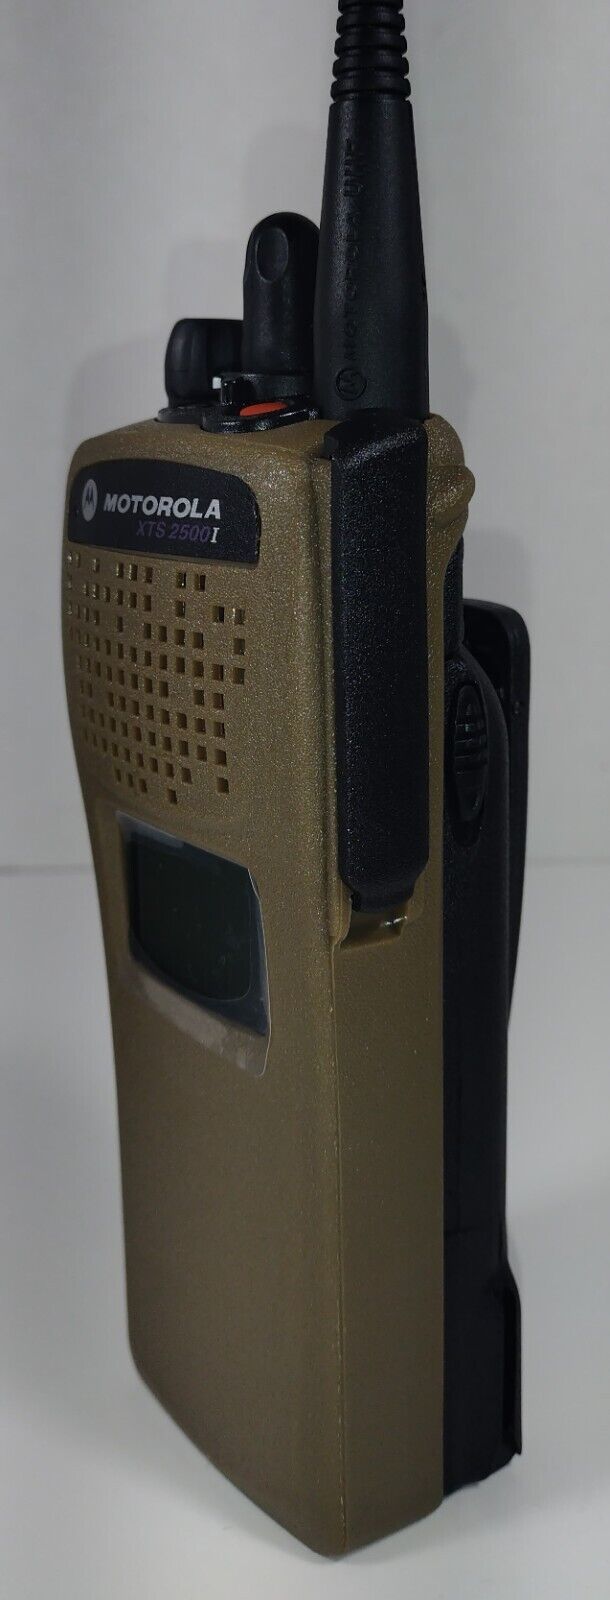 Motorola XTS2500 1.5 VHF 136-174 MHz P25 Digital Two Way Radio H46KDD9PW5BN